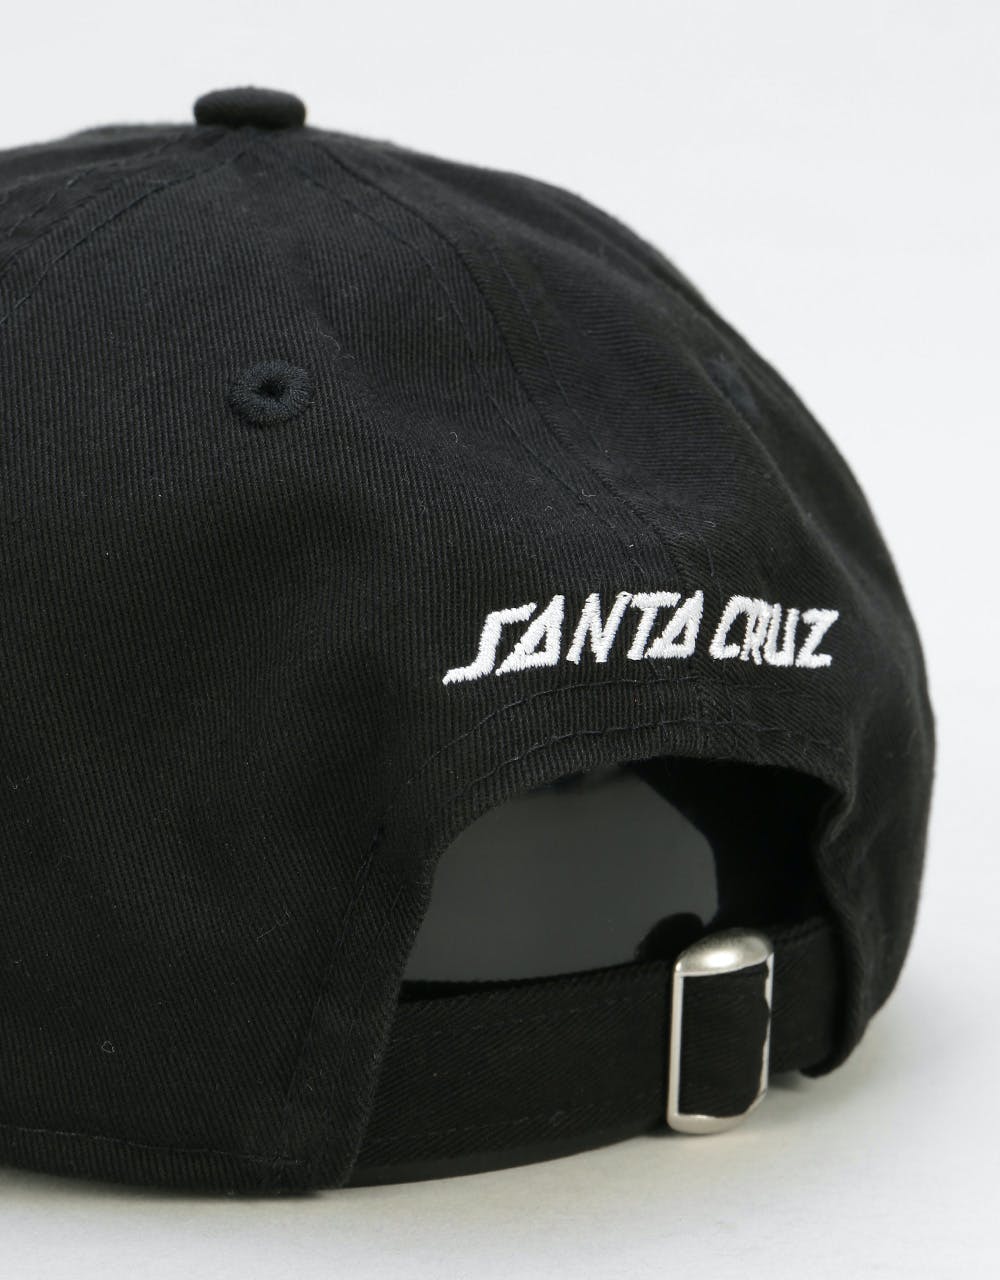 New Era x Santa Cruz 9Forty Screaming Hand Cap - Black